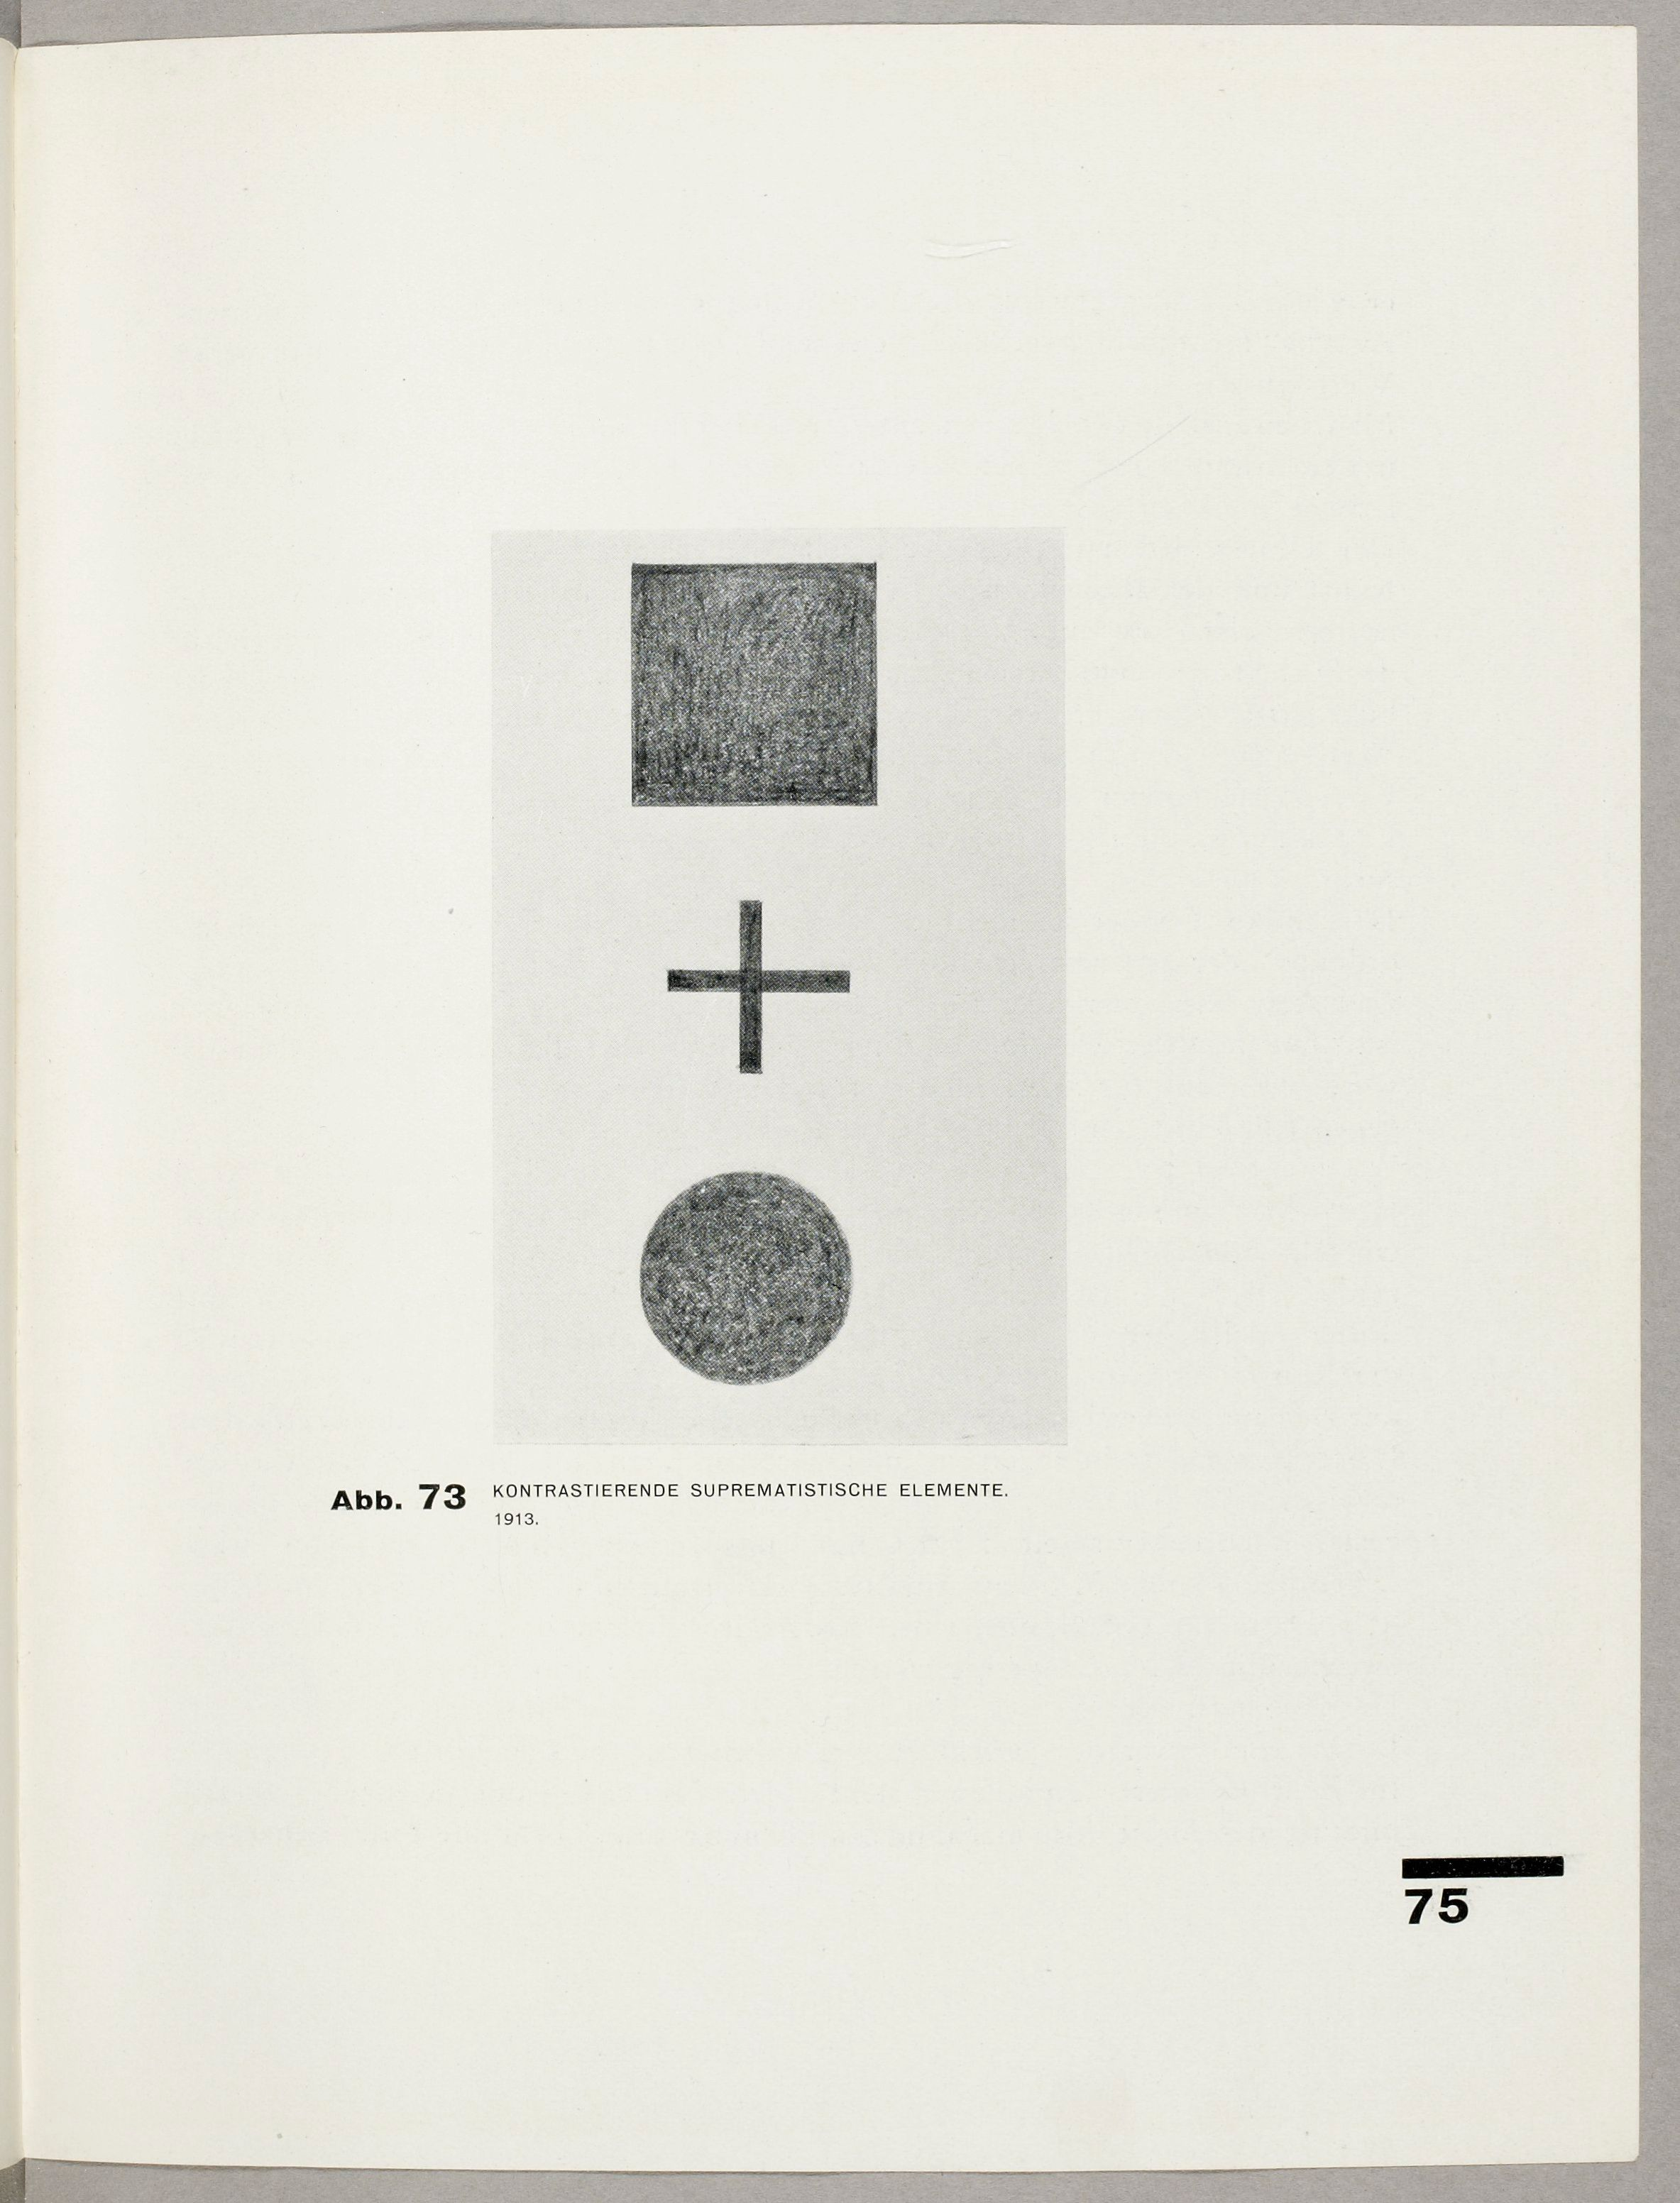 Contrasting suprematistic elements (1927).